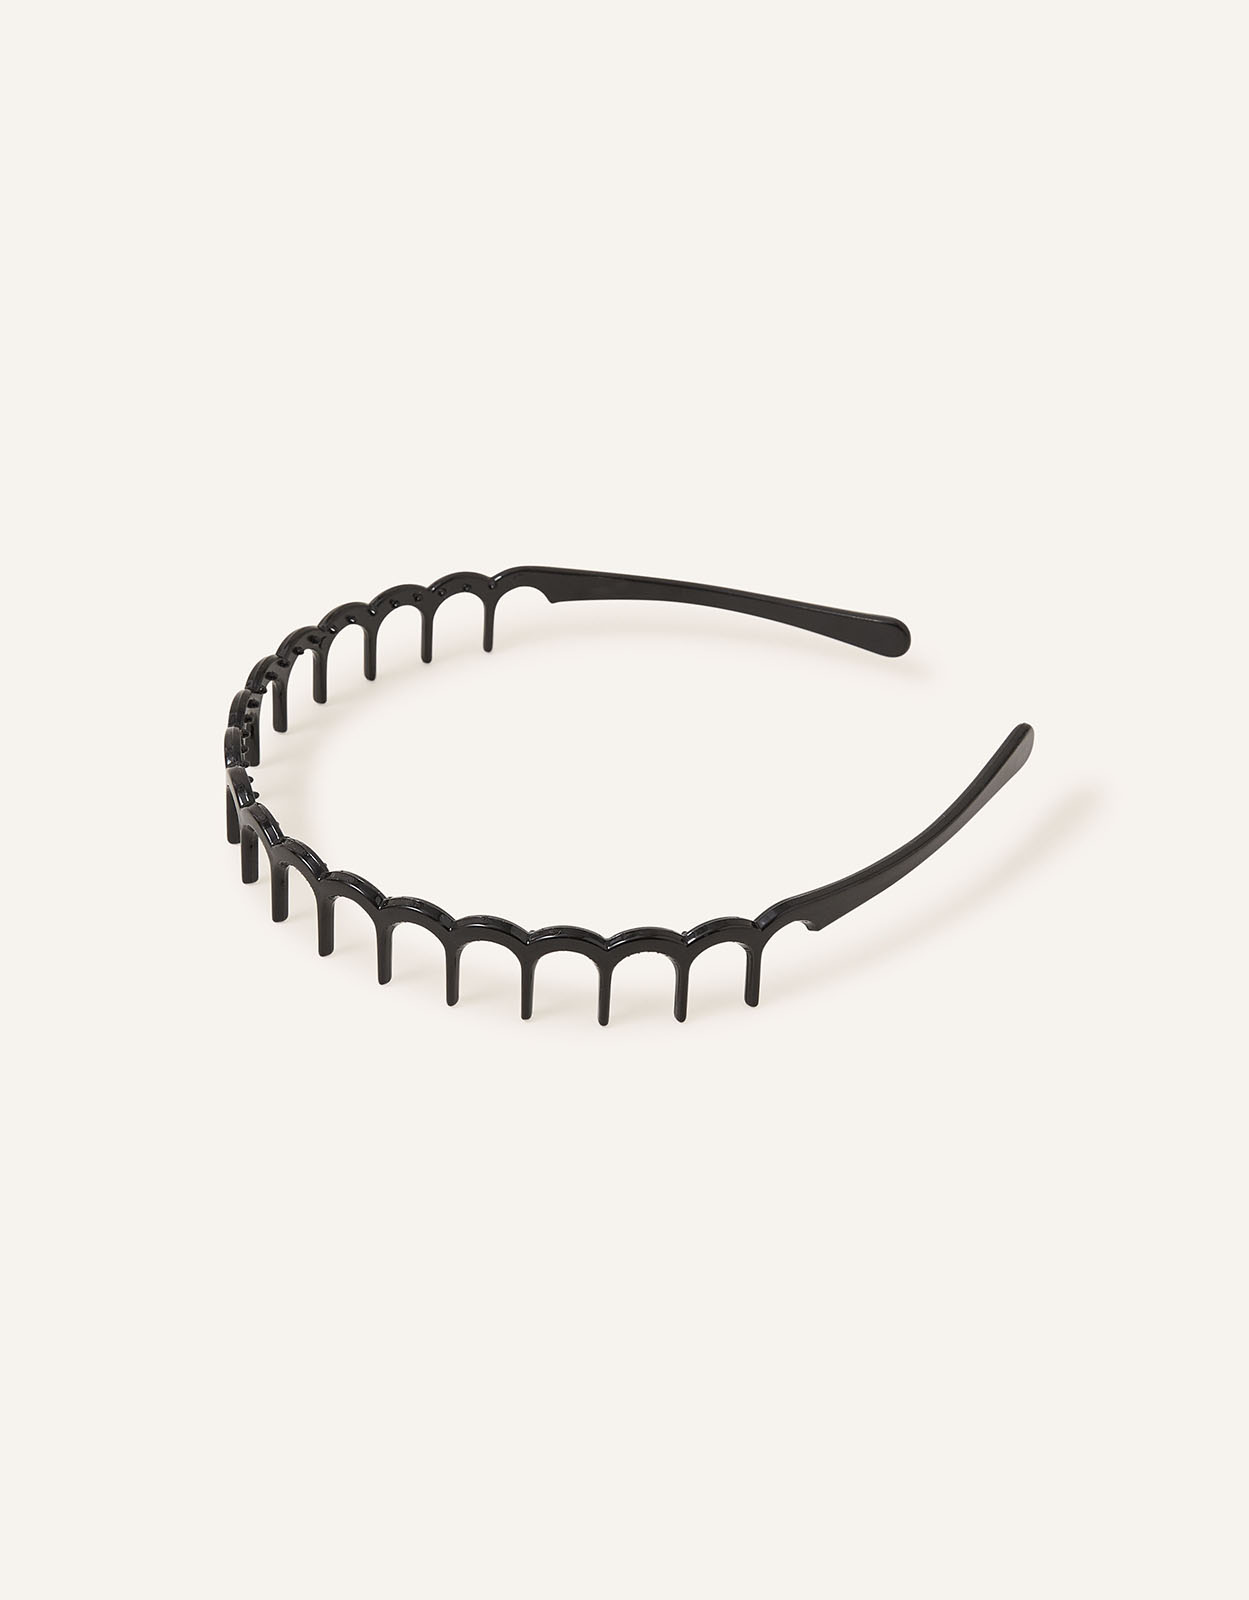 Accessorize Women's Black Teeth Comb Headband, Size: L 12 cm